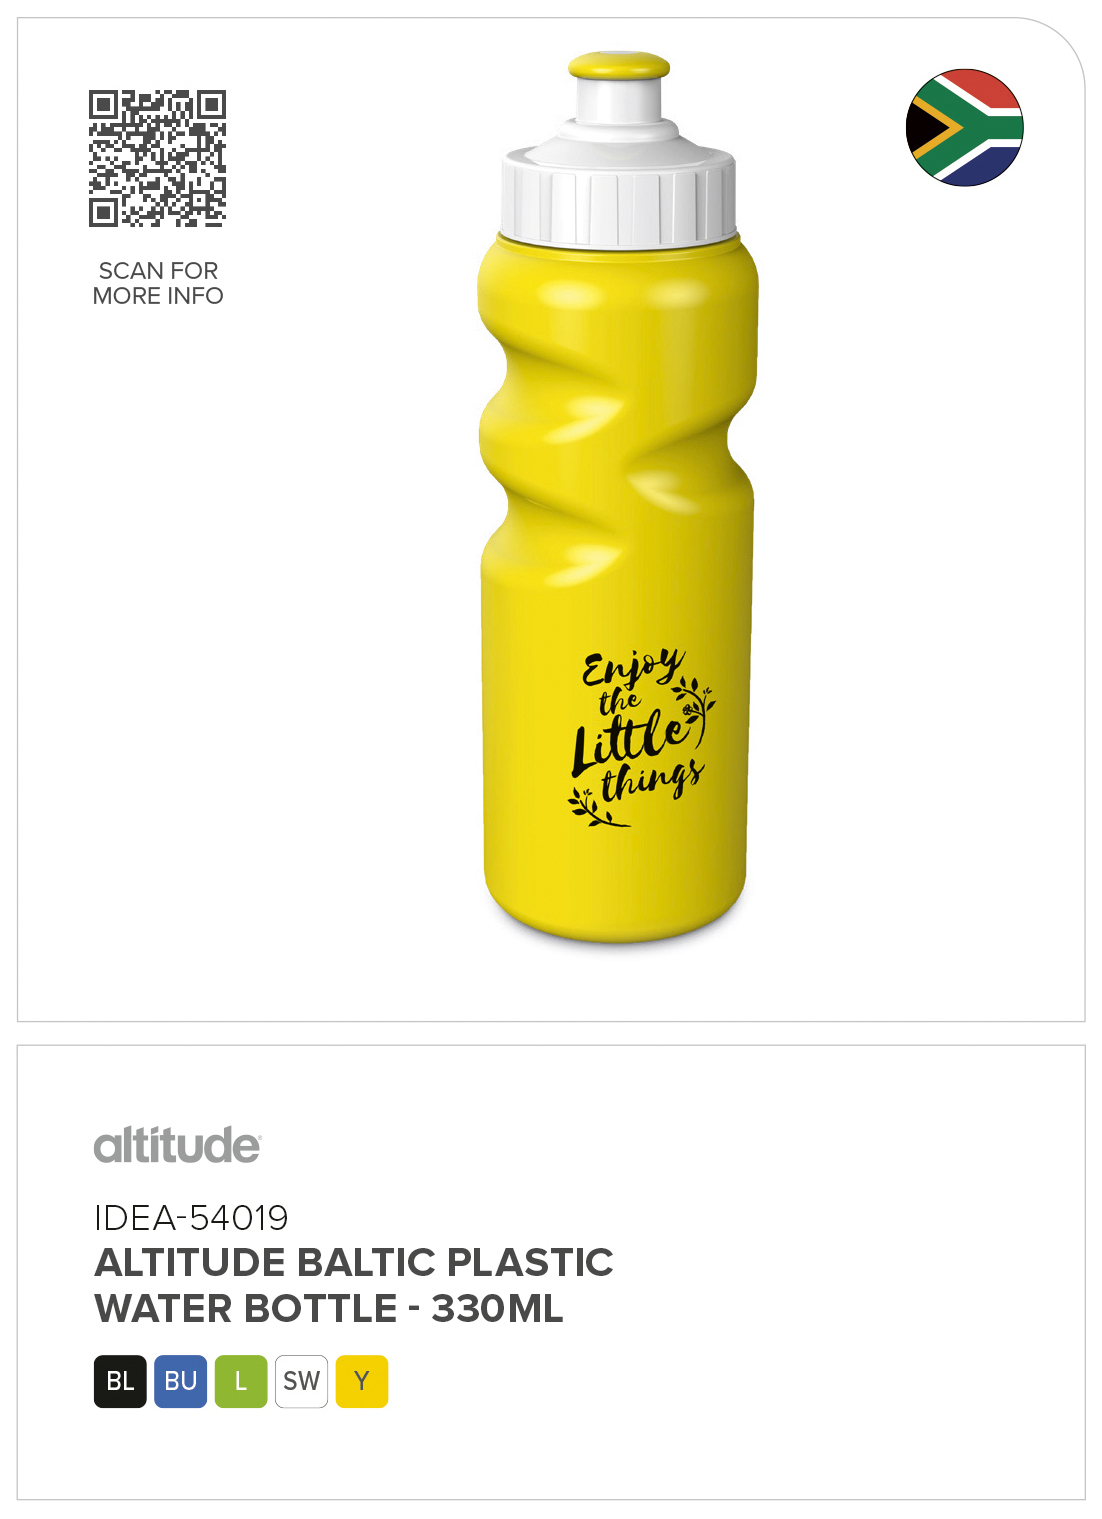 Altitude Baltic Plastic Water Bottle - 330ml CATALOGUE_IMAGE